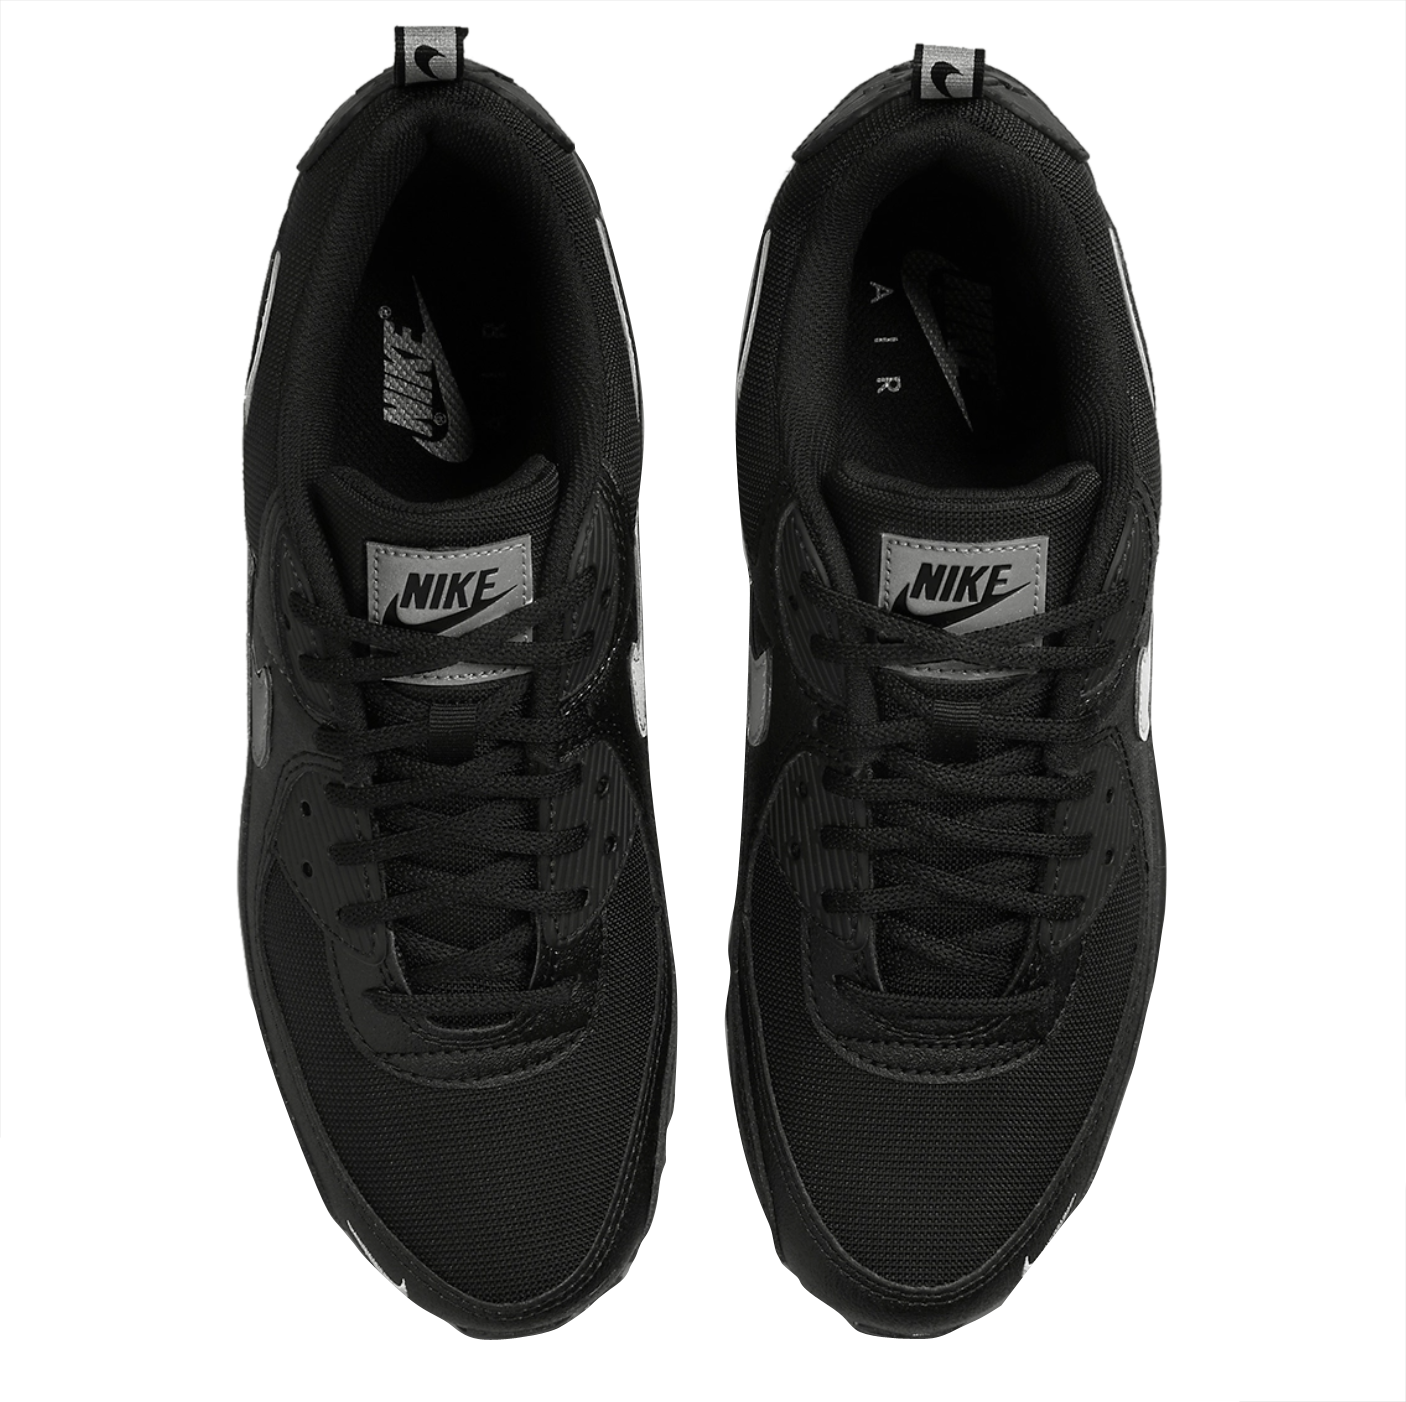 Nike Air Max 90 Black Silver DX8969-001 - KicksOnFire.com